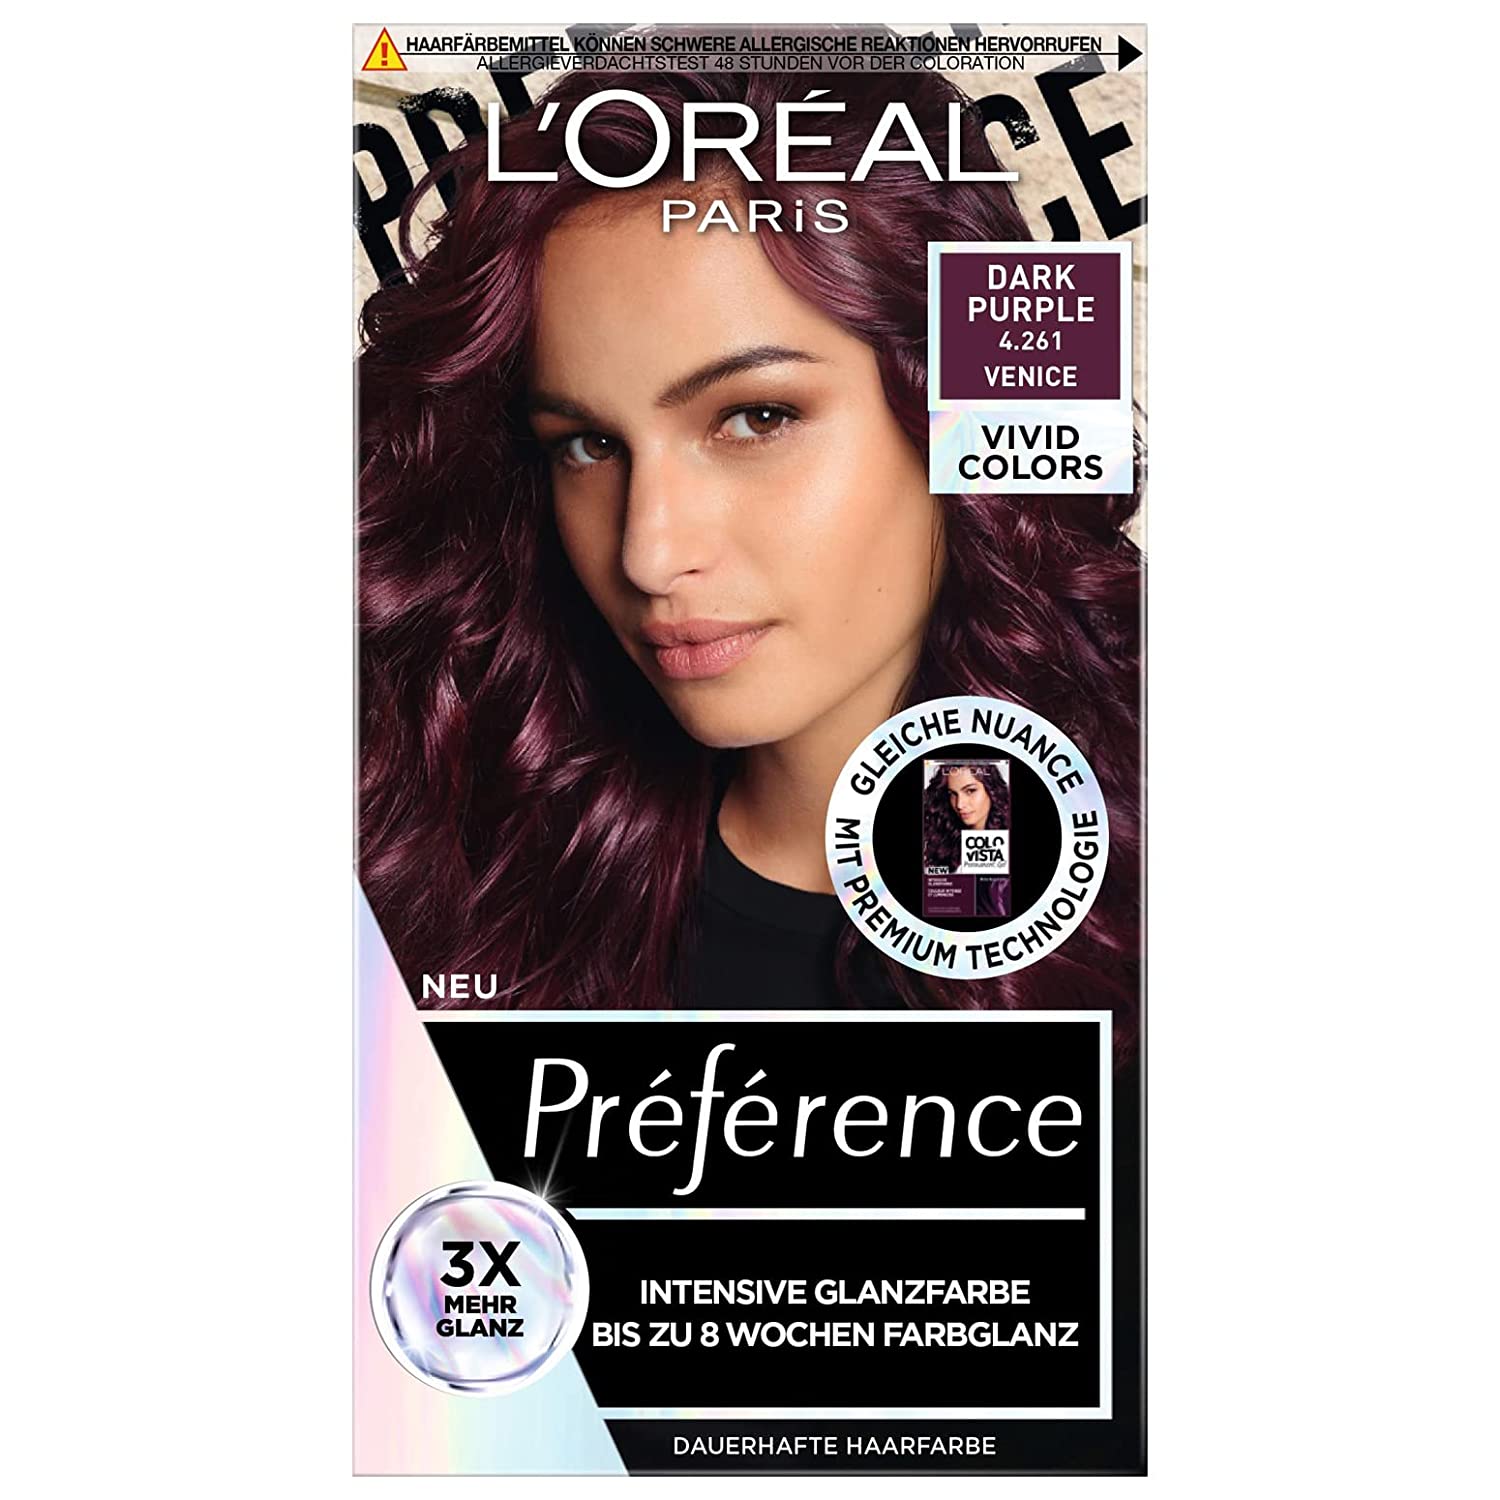 L'Oréal Paris L\'Oréal Paris Intensive dauerhafte Haarfarbe, Bis zu 8 Wochen glänzendes Haar und intensive Farbe, Préférence Vivid Colors, Farbe: 4.261 DARK PURPLE, 1 Stück, purple ‎4.261